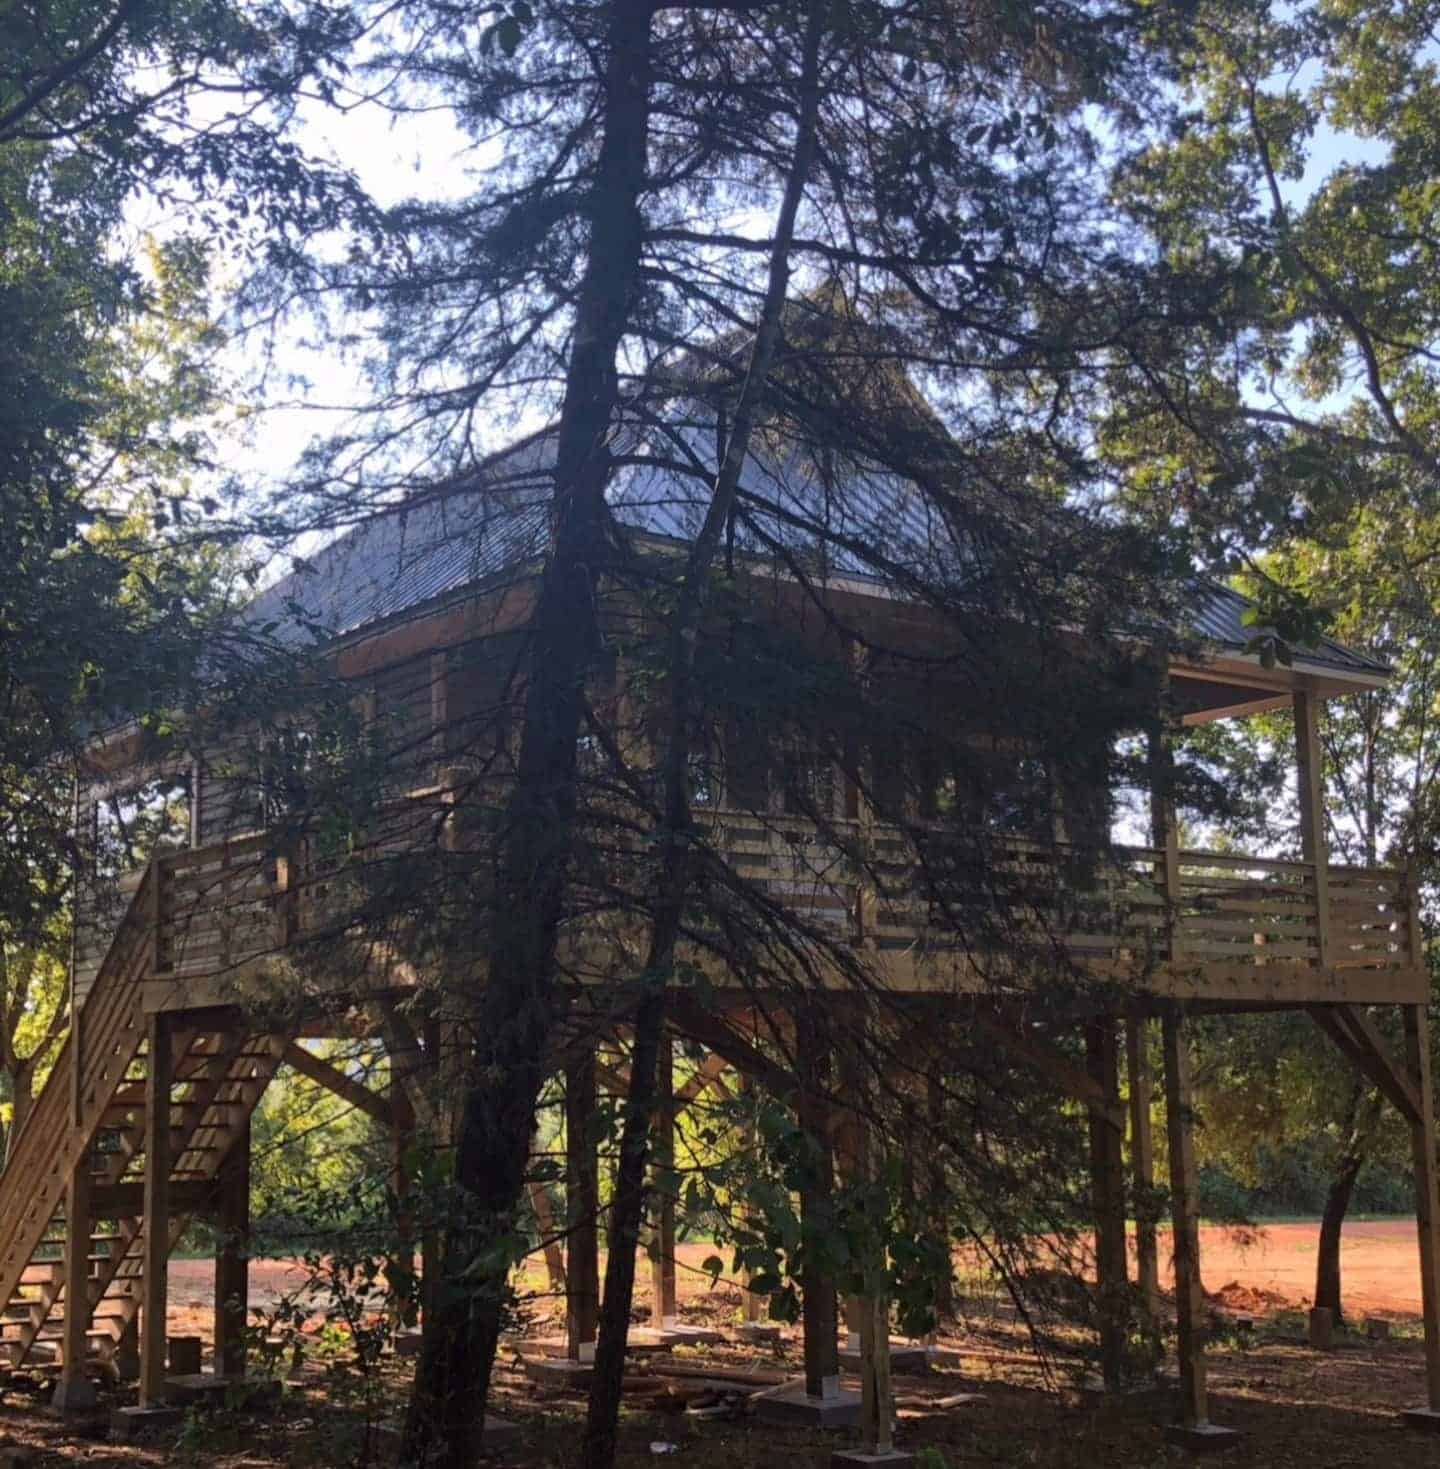 Image of treehouse rental in Arkansas